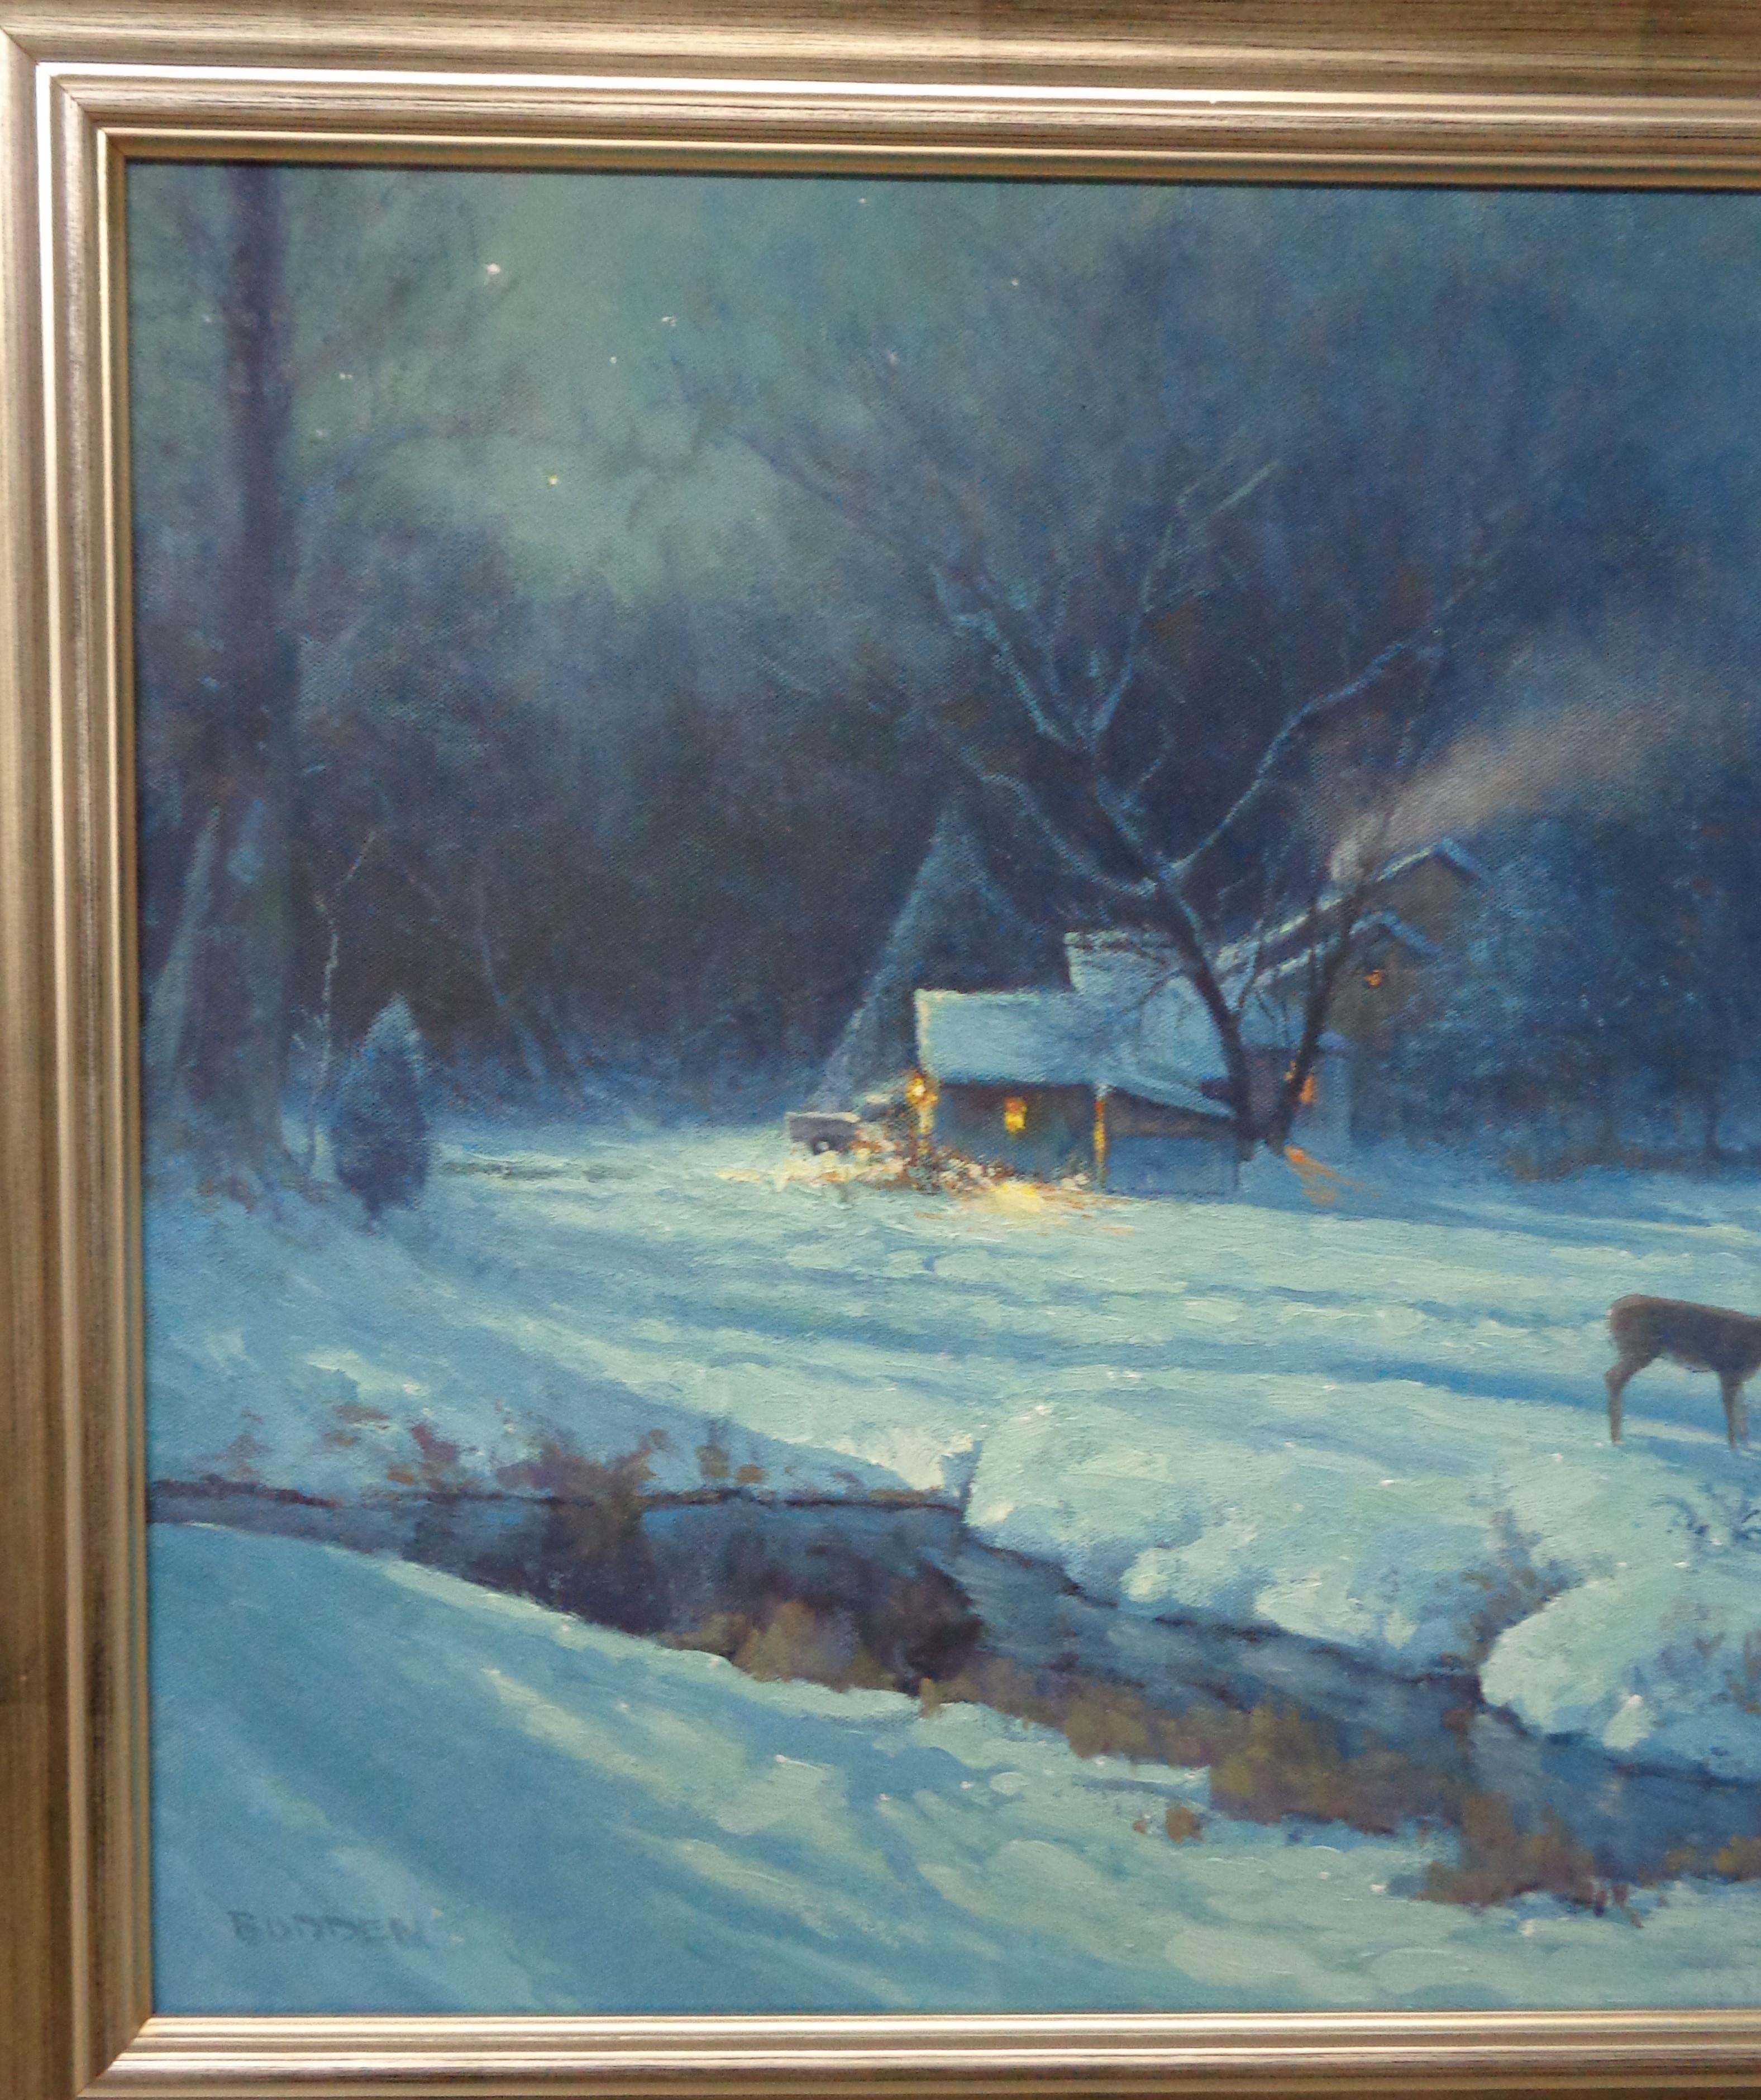   Winter Landscape Oil Painting Michael Budden Snow Moonlight Stars Cabin Deer For Sale 1